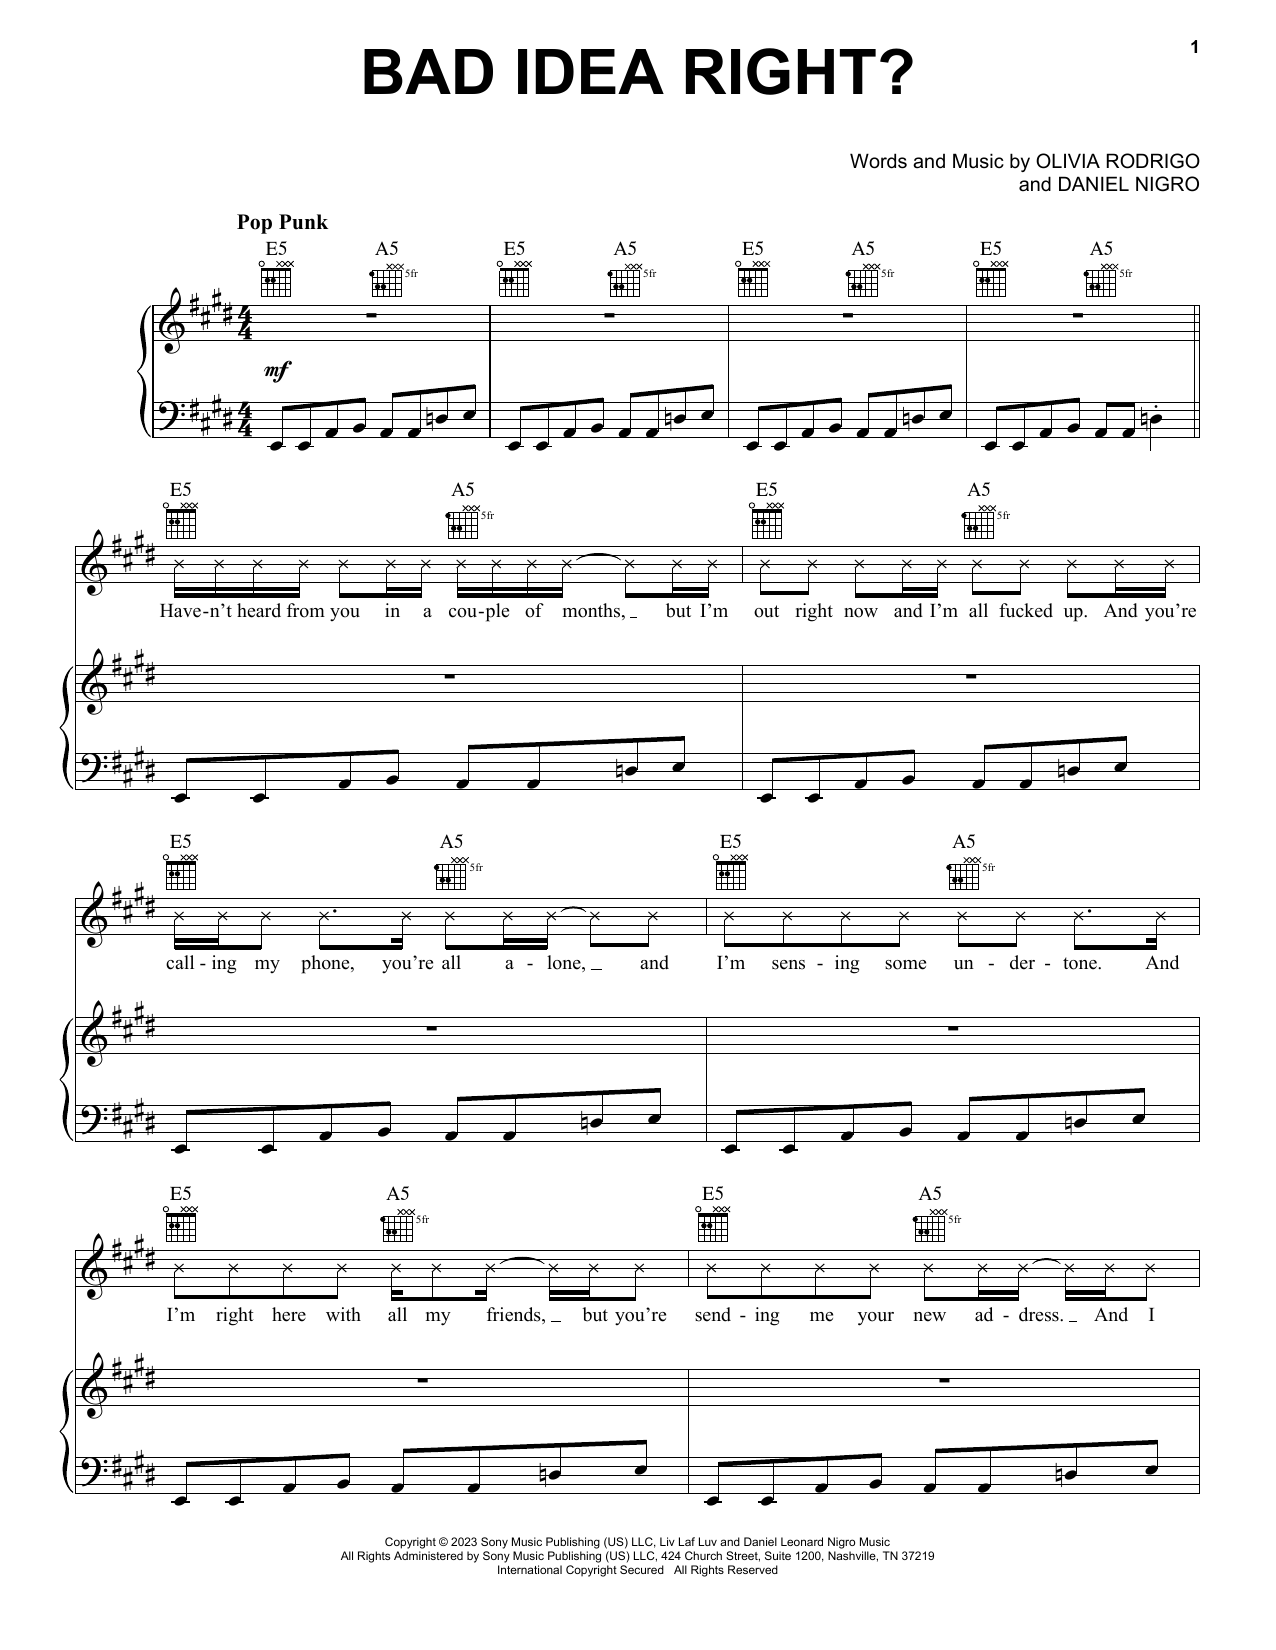 Olivia Rodrigo bad idea right? Sheet Music Notes & Chords for Piano, Vocal & Guitar Chords (Right-Hand Melody) - Download or Print PDF